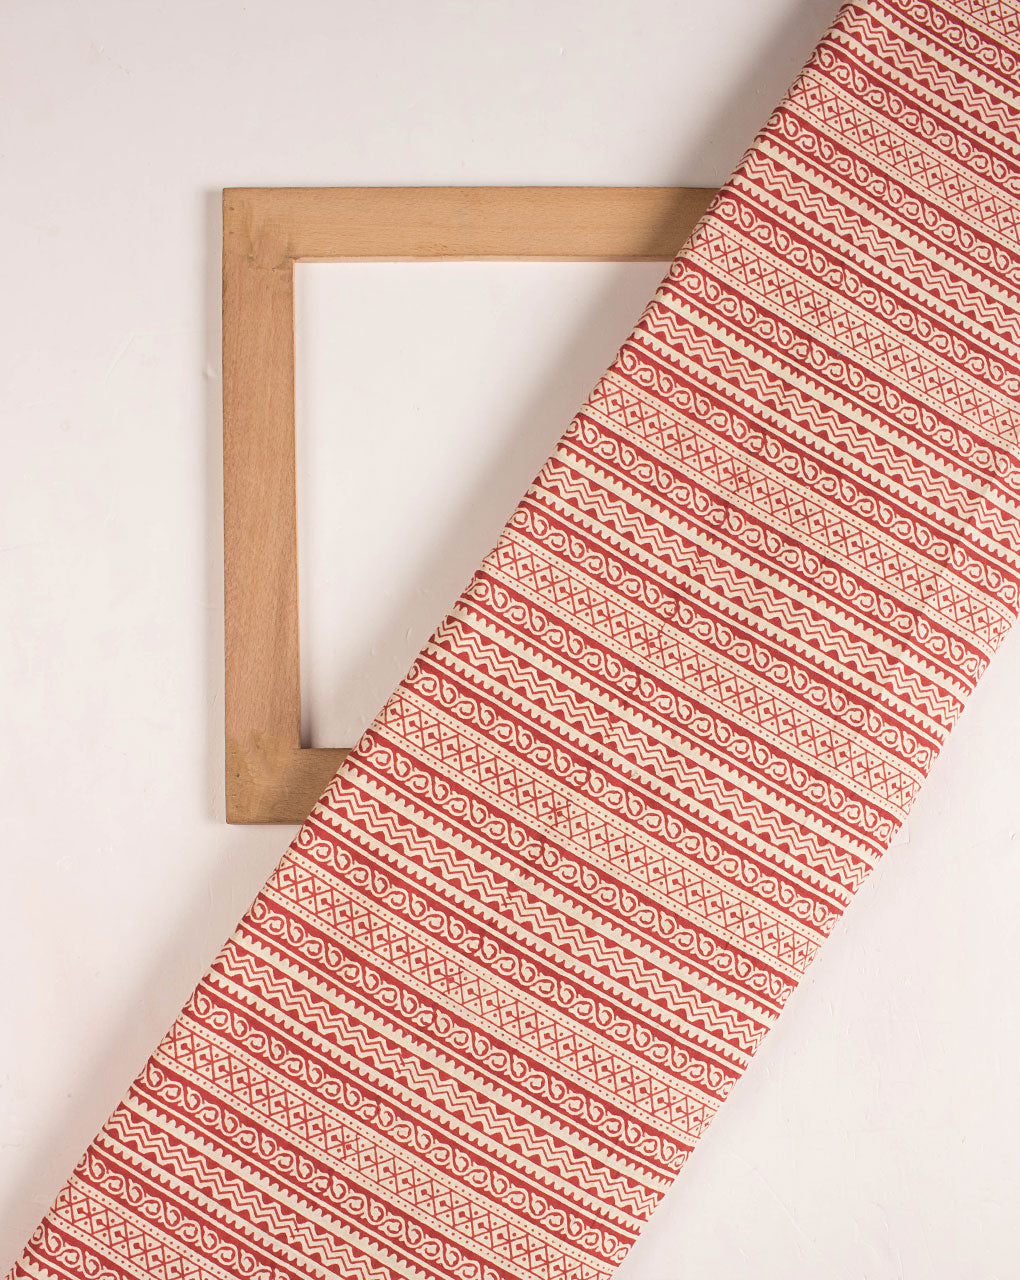 Stripes Screen Print Cotton Fabric - Fabriclore.com